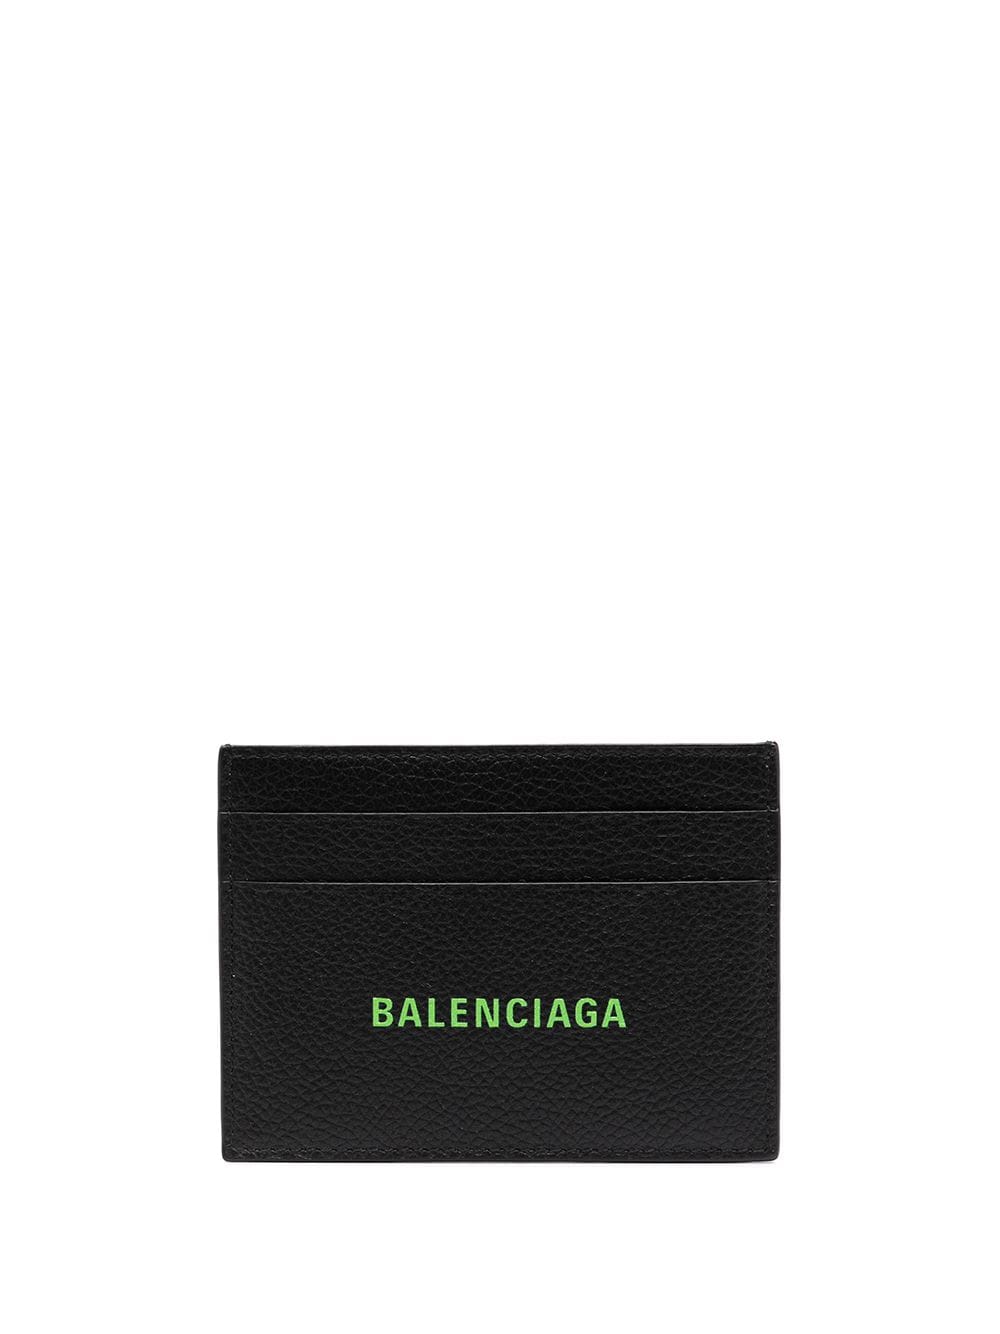 BALENCIAGA Logo Card Holder Black/Green - MAISONDEFASHION.COM